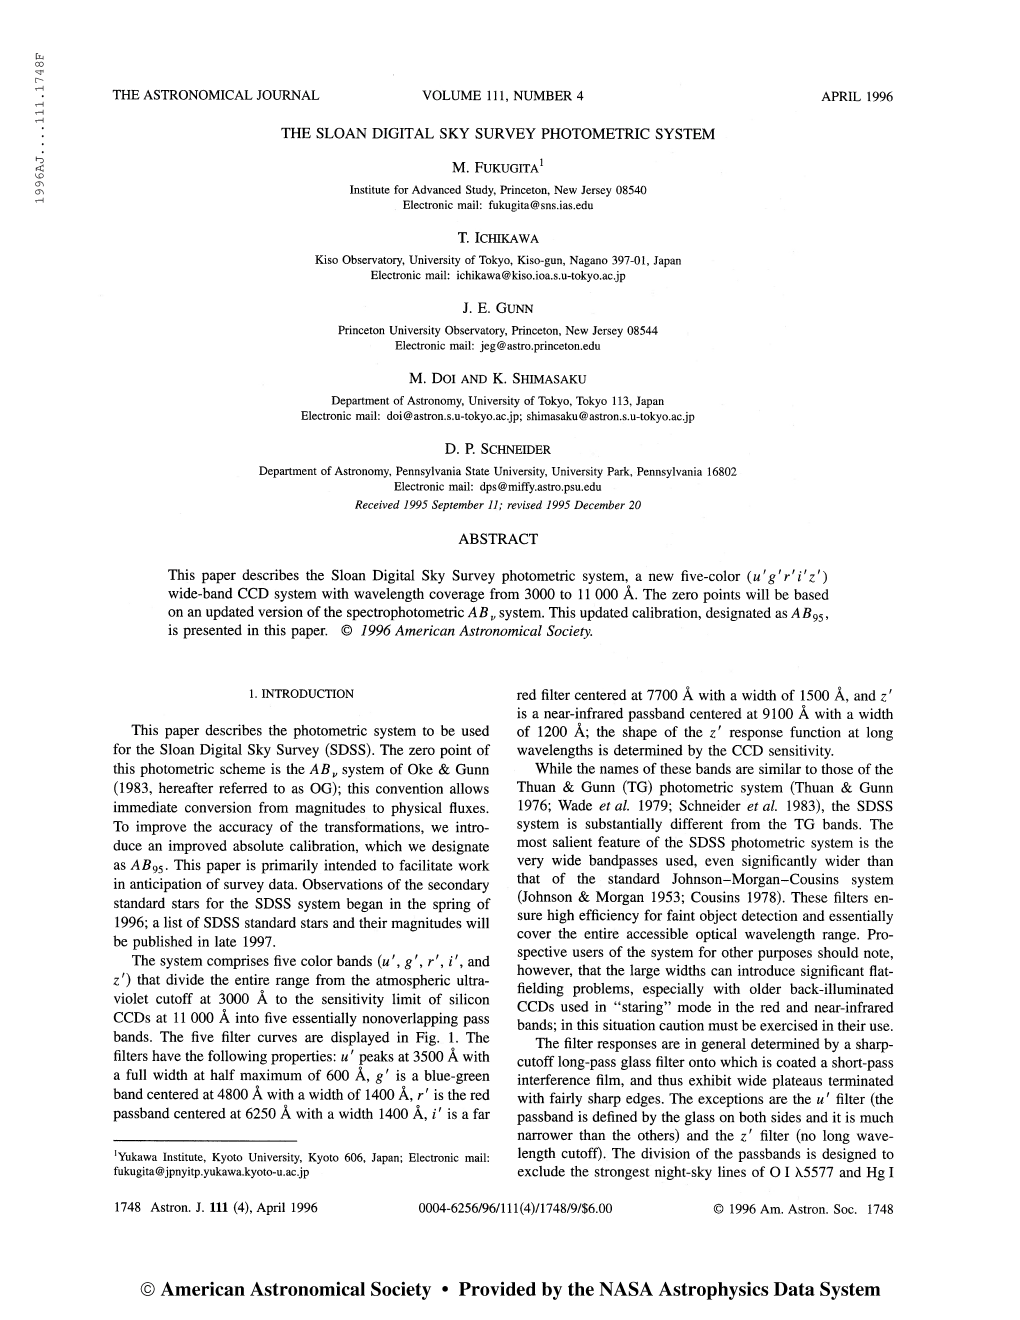 1996Aj 111.1748F the Astronomical Journal Volume 111, Number 4 April 1996 the Sloan Digital Sky Survey Photometric System M